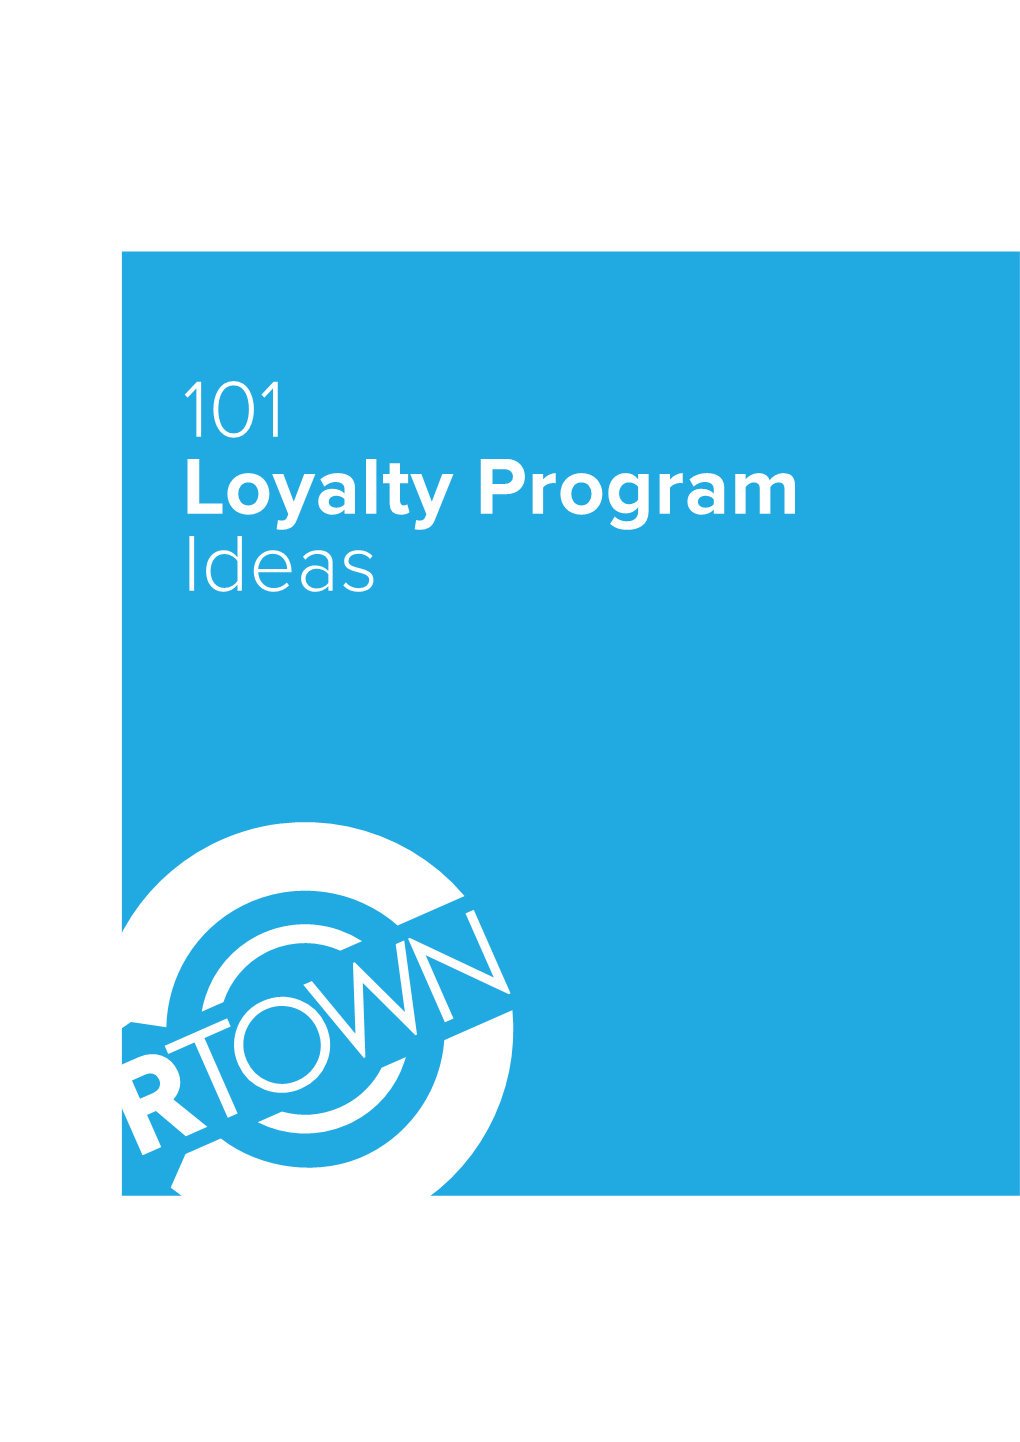 101 Loyalty Program Ideas Contents